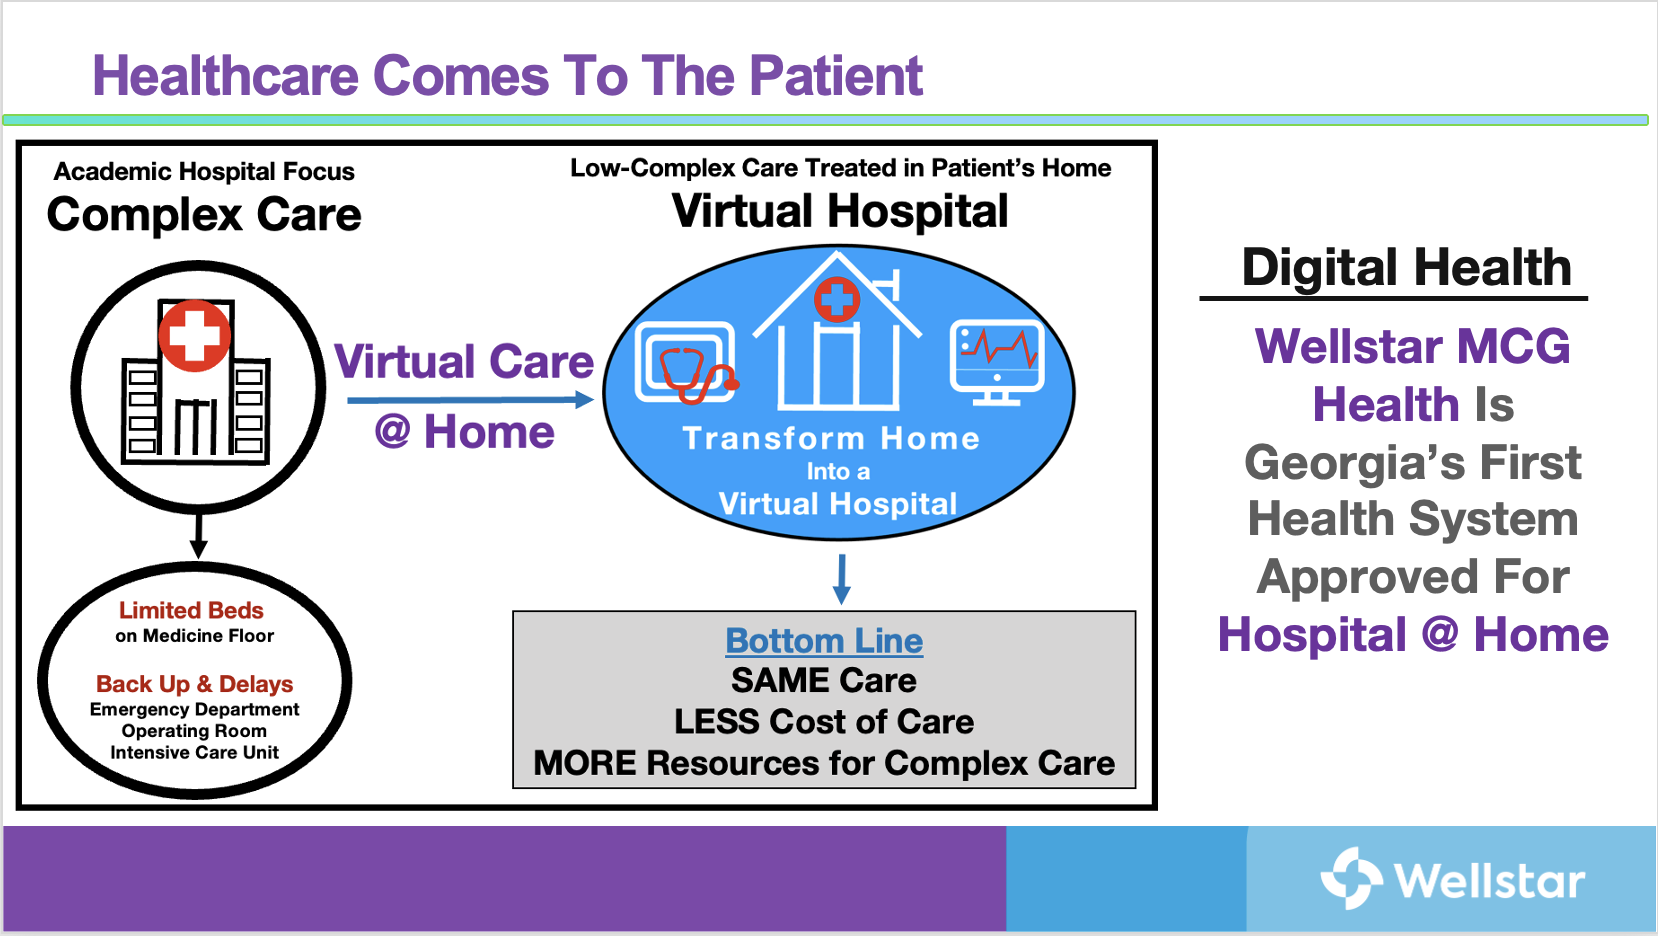 Virtual Care @ Home